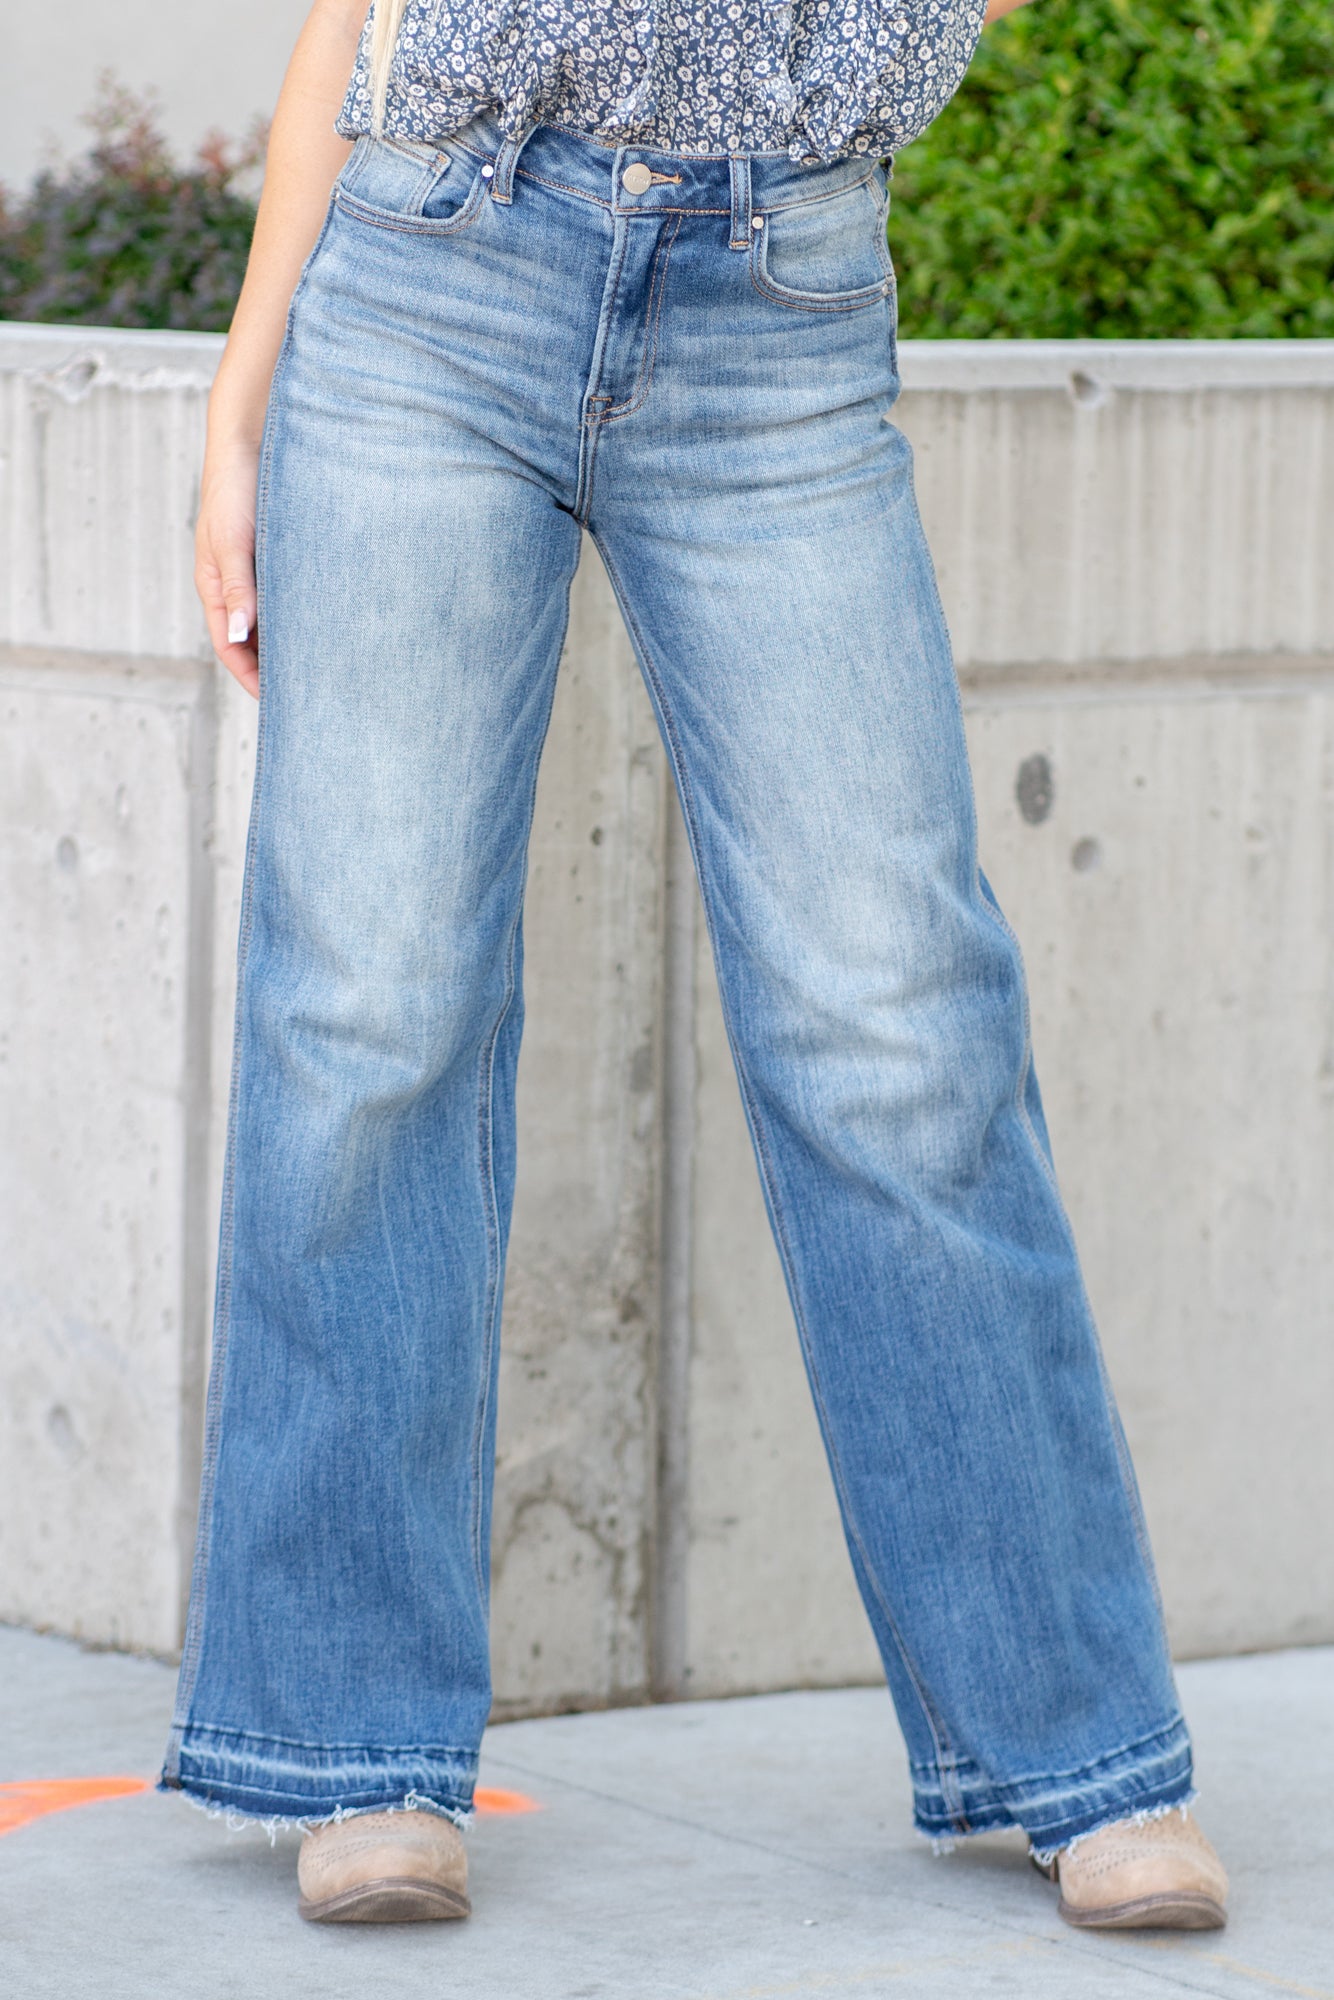 Japan Blue Jeans 30inch High quality Denim Made In Japan Japanese Selvedge  | eBay